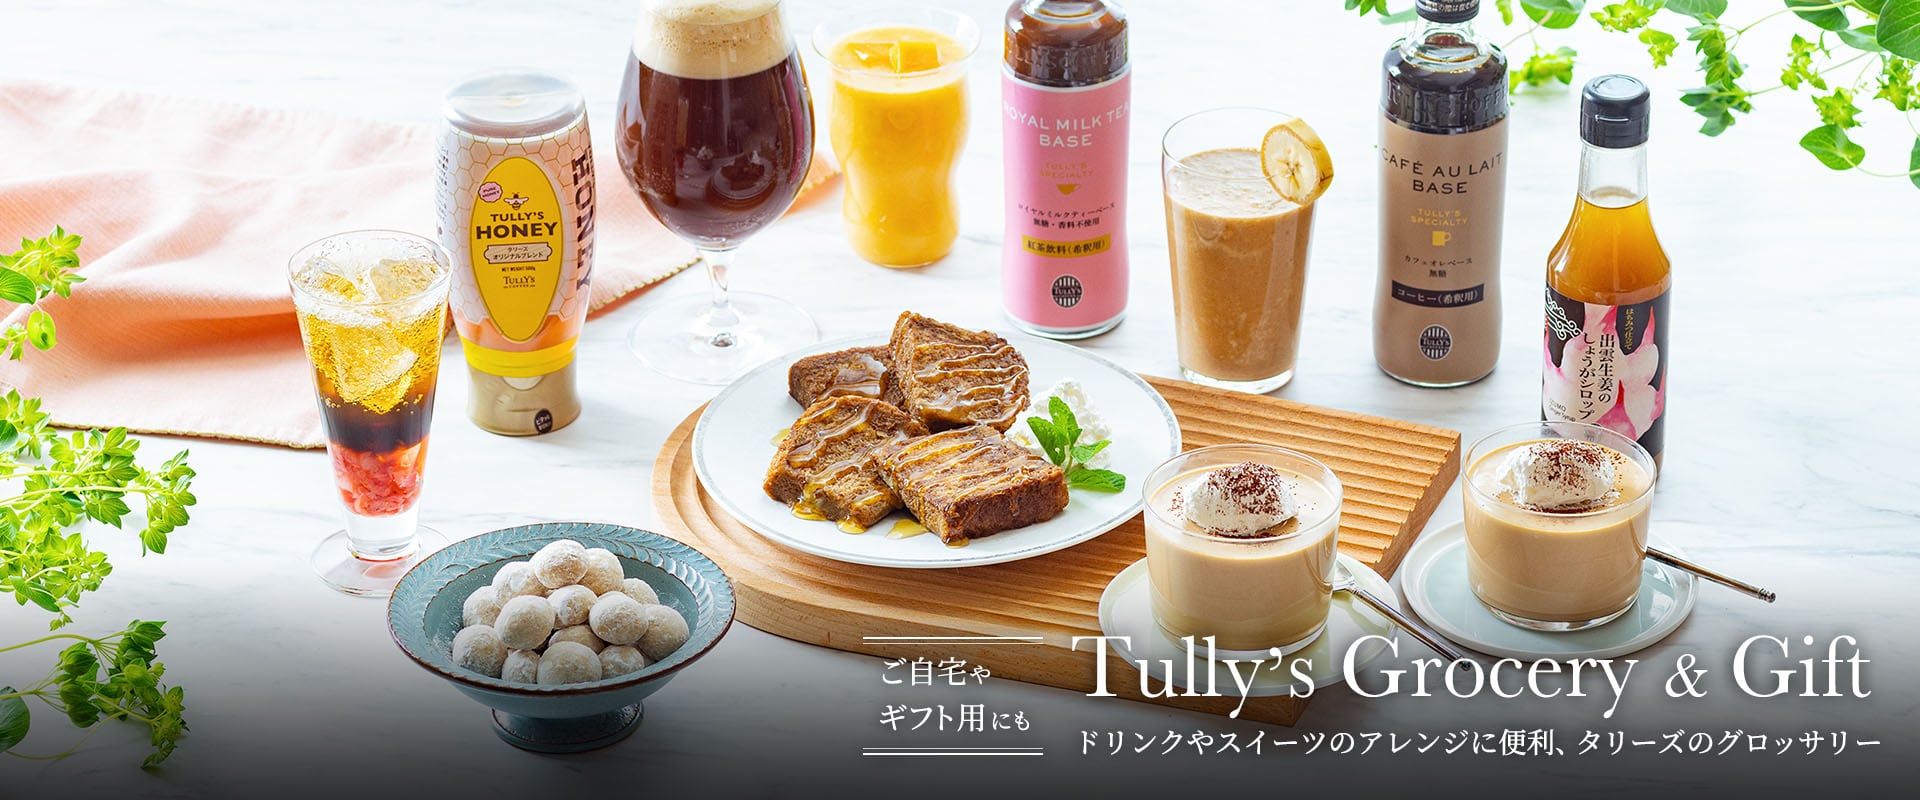 Tully's grocery ”おうちカフェ”を彩るタリーズグロッサリー For Gift